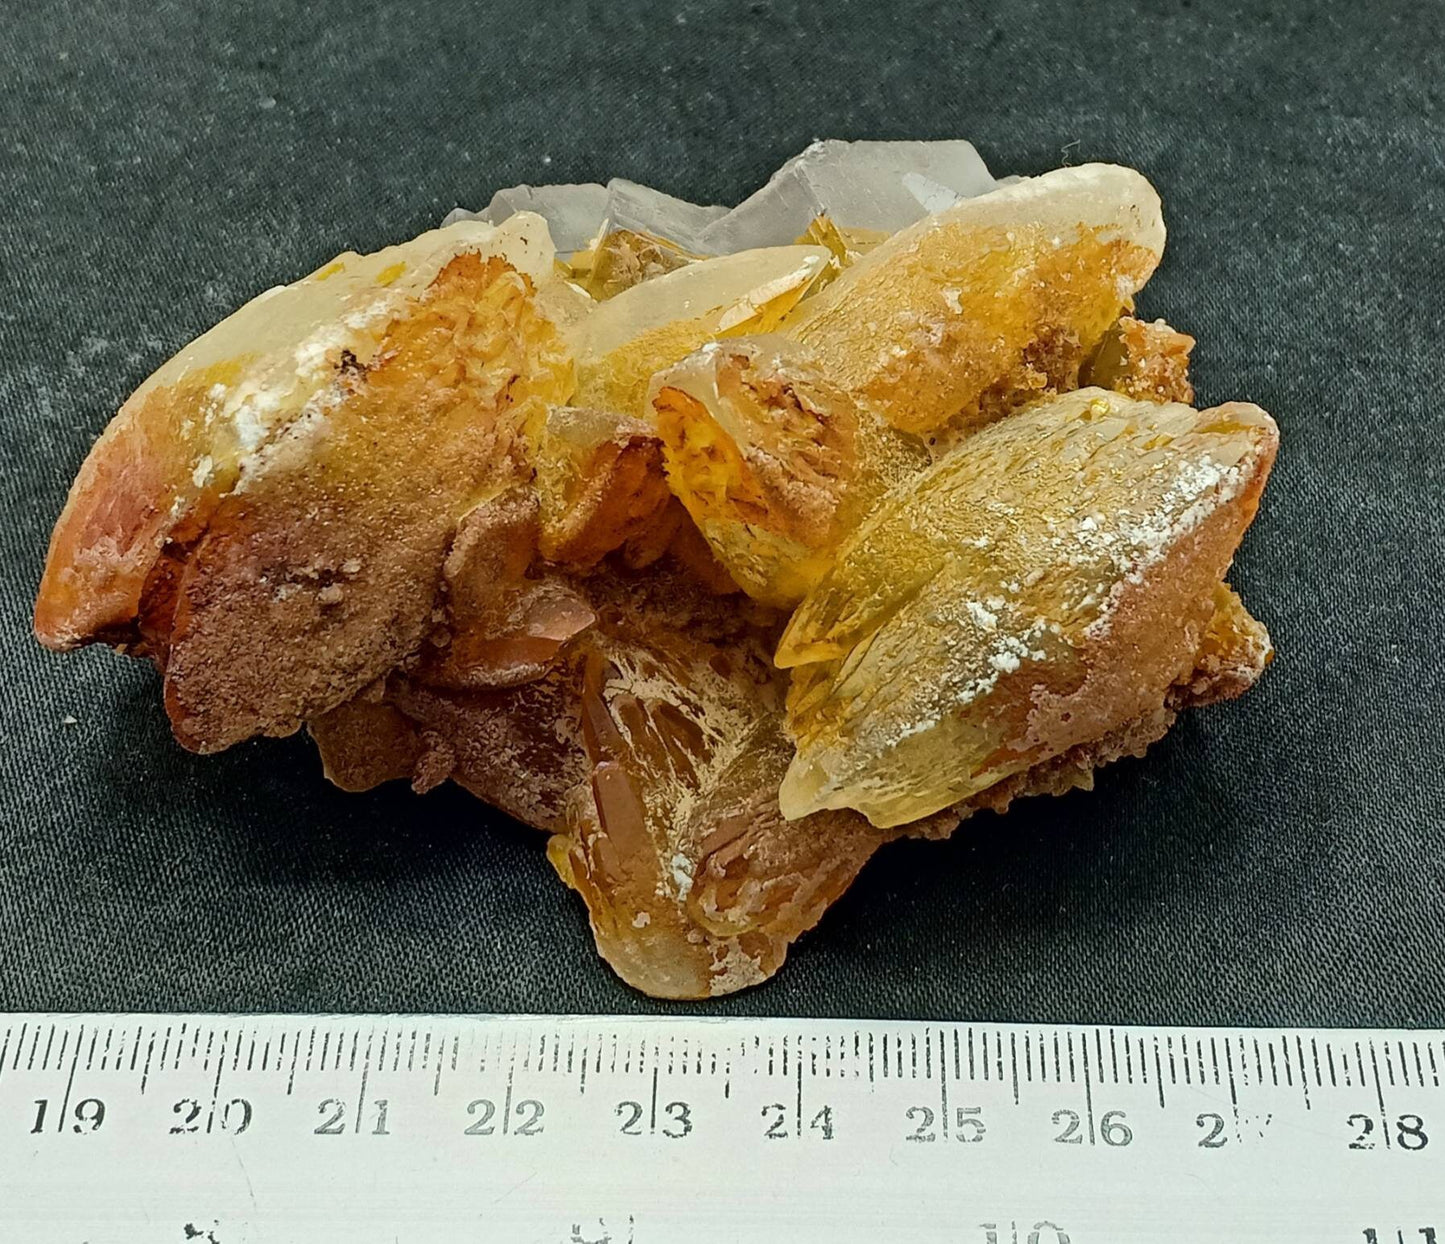 Dogteeth calcite with Fluorite from Balochistan Pakistan 249 grams